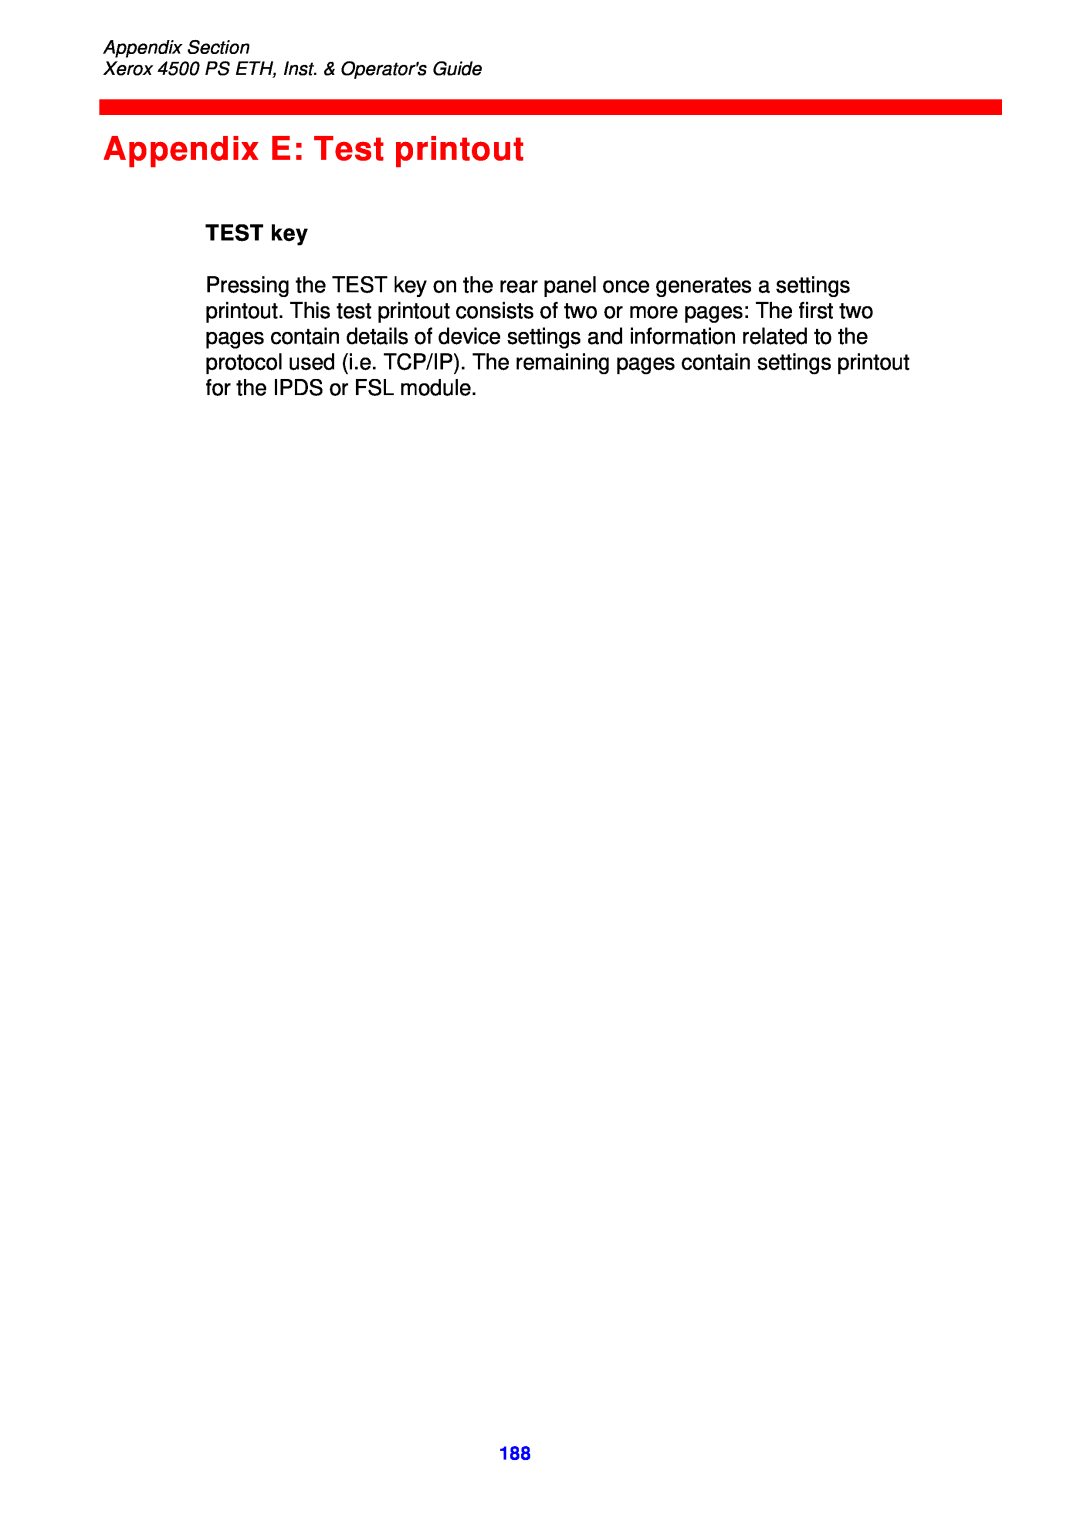 Xerox 4500 ps eth instruction manual Appendix E Test printout, TEST key 